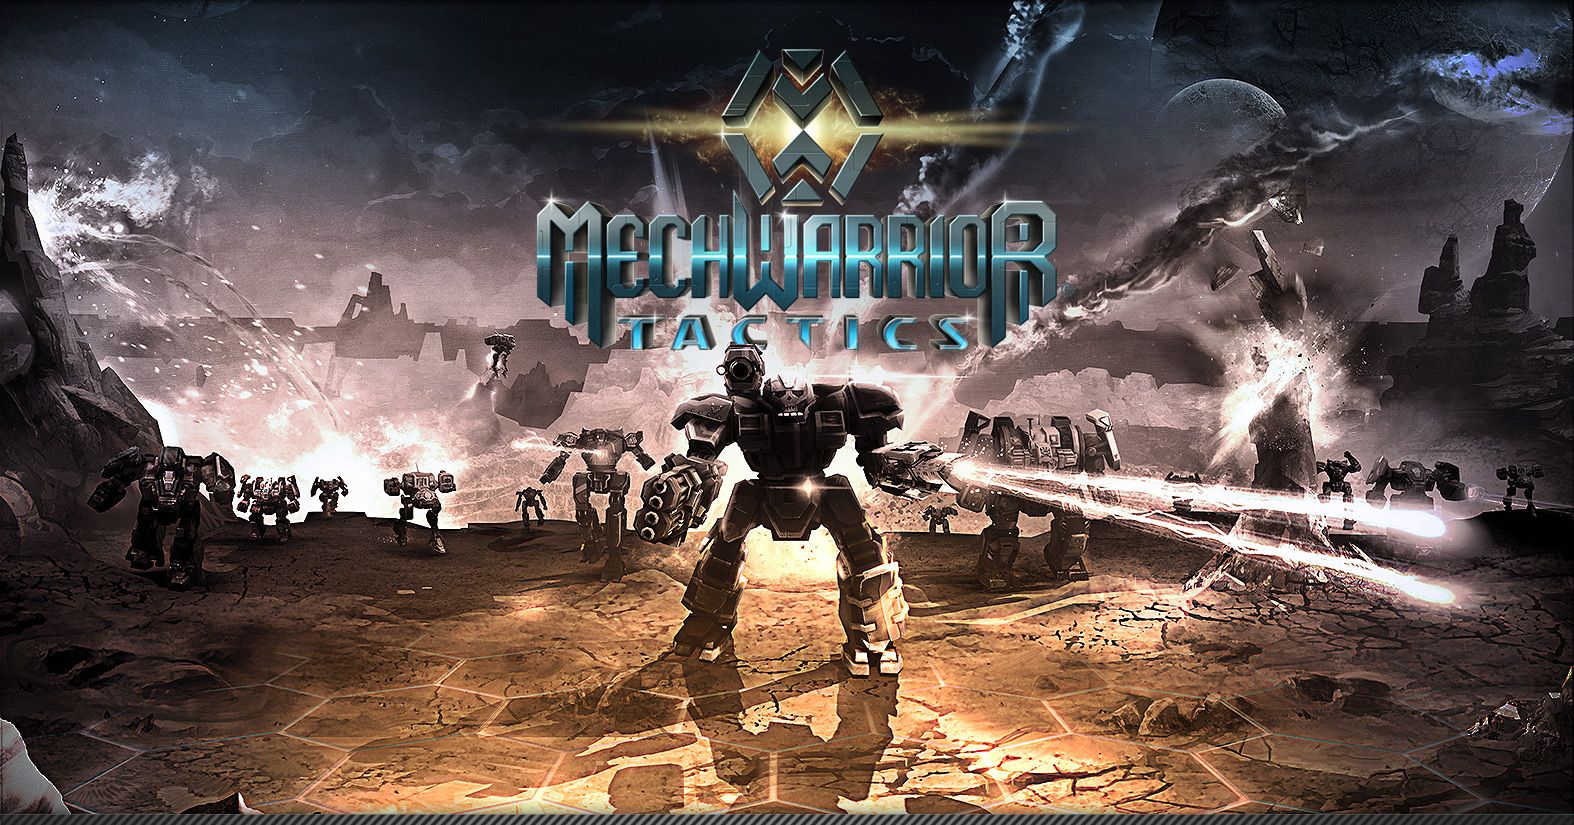 Mechwarrior Tactics Wallpaper